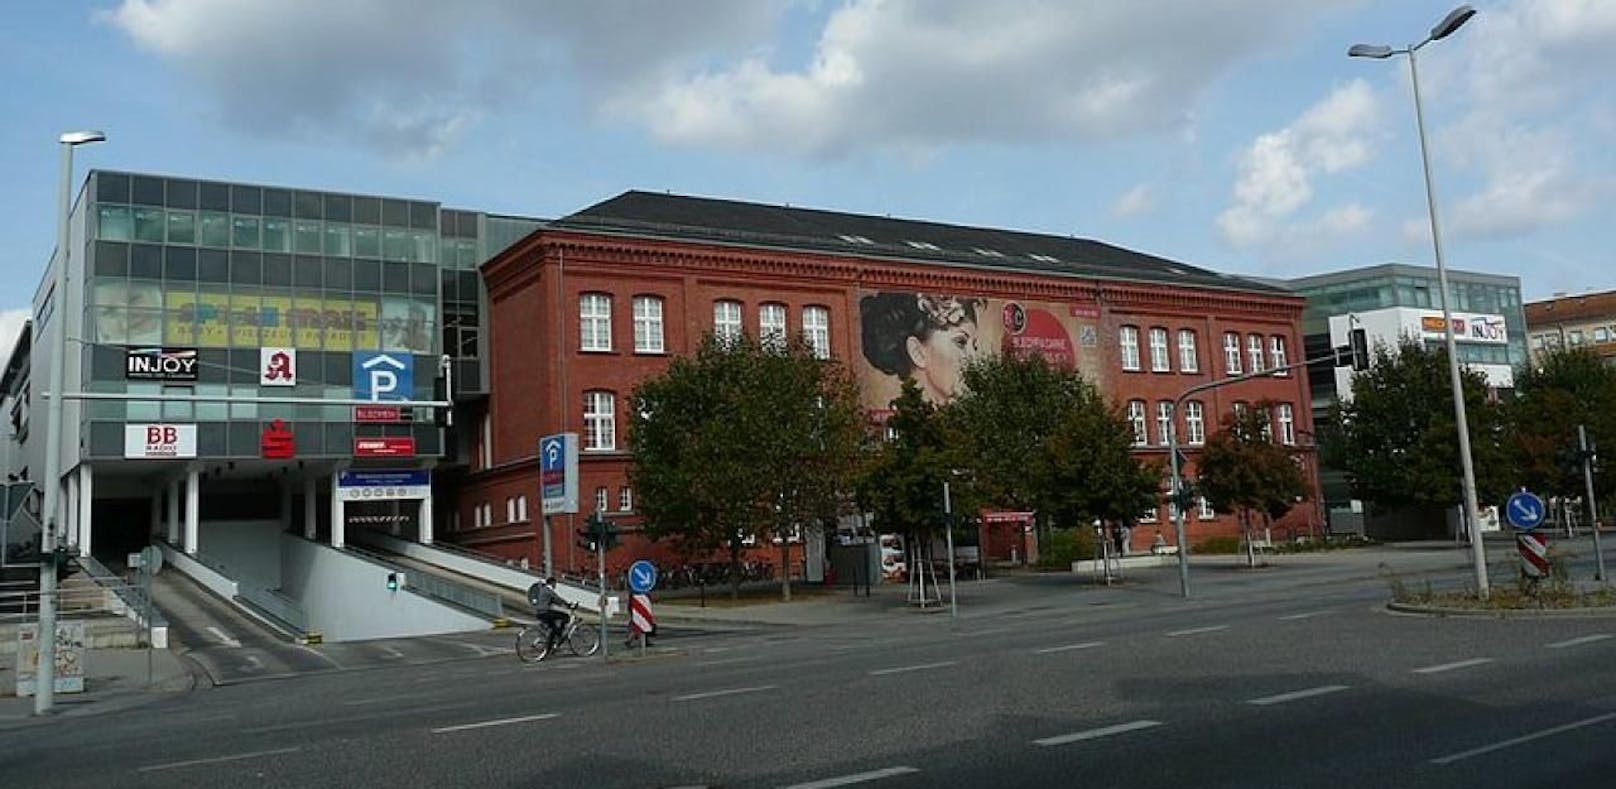 Blick auf das Blechen Carré in Cottbus mit seiner historischen Fassade der Carl Blechen-Grundschule. Wikimedia Commons/Lobedan, CC-BY-SA 4.0